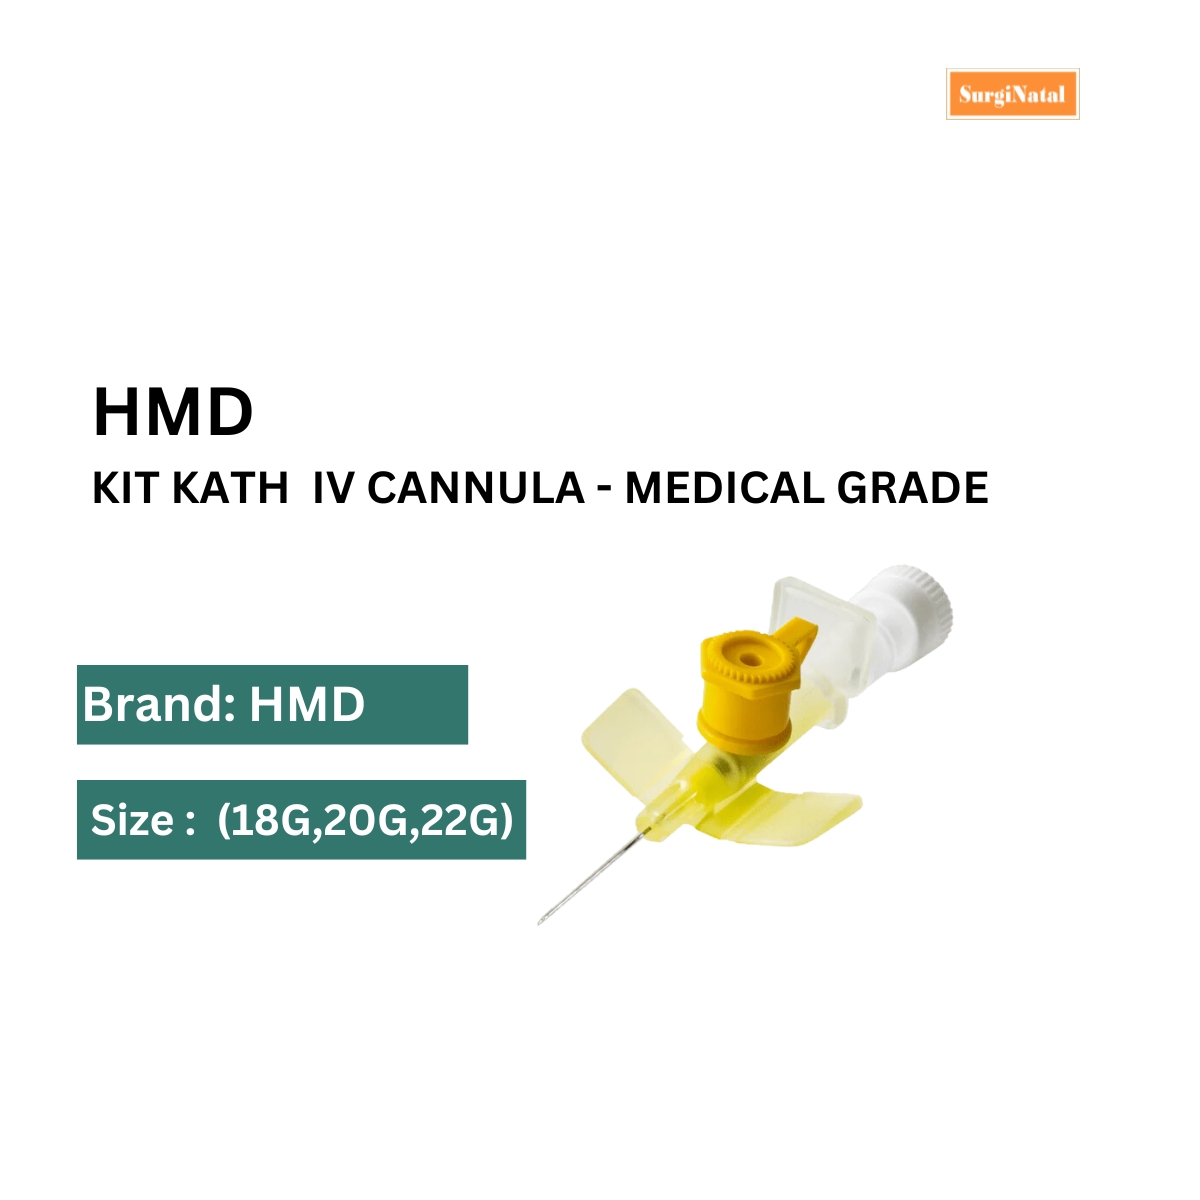 hmd kit kath iv cannula - medical grade